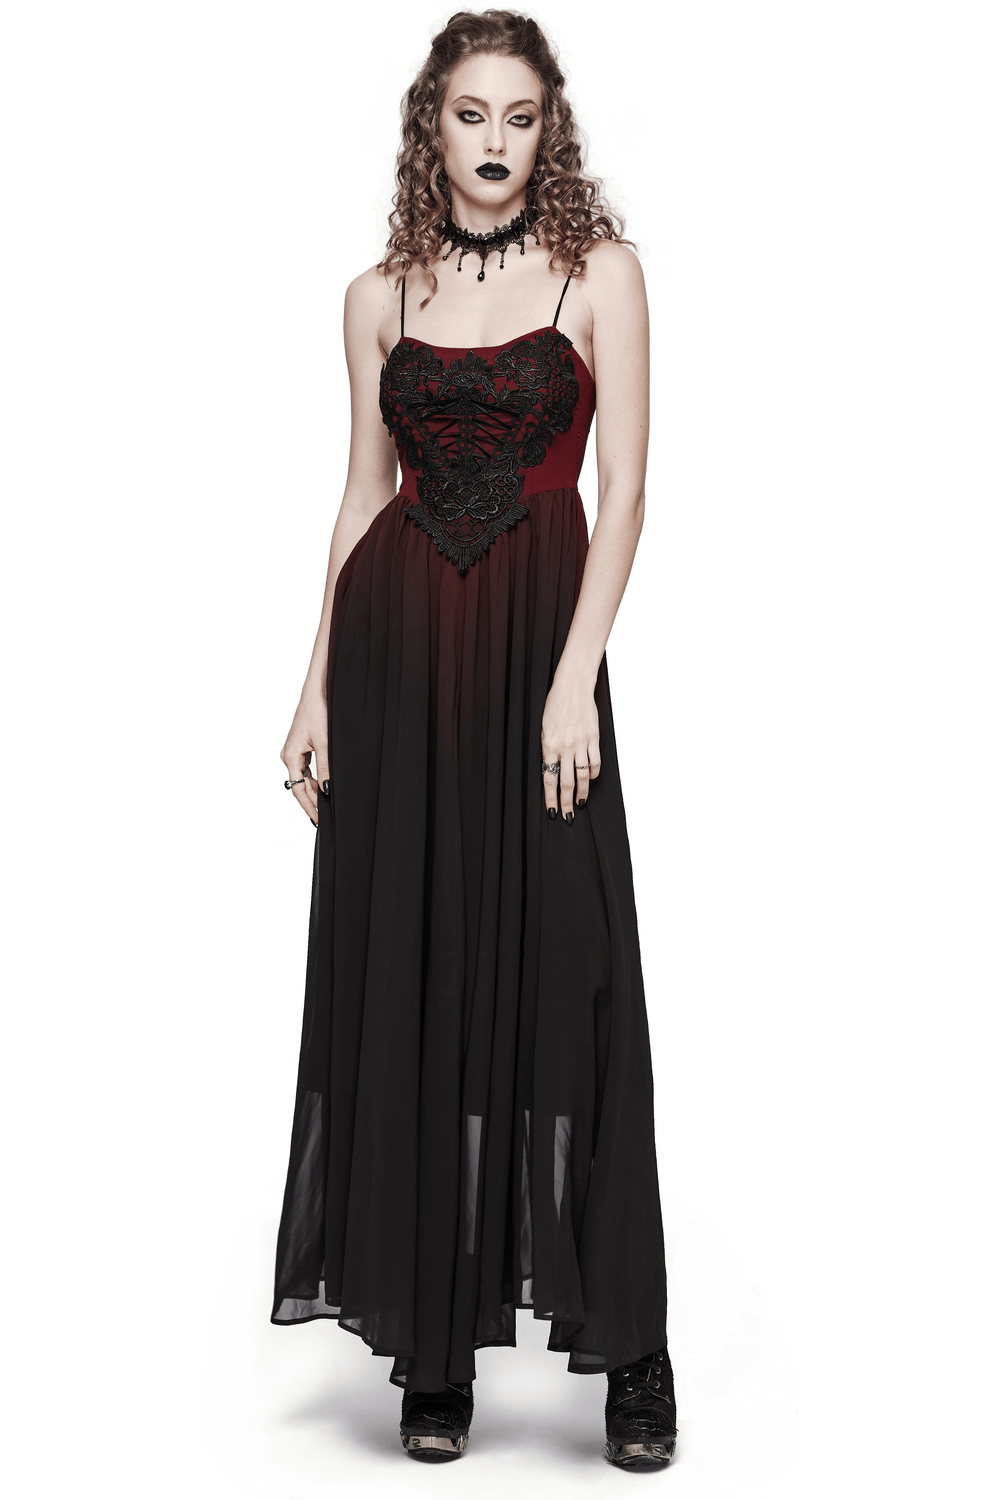 Sleek Gothic Long Dress with Adjustable Straps